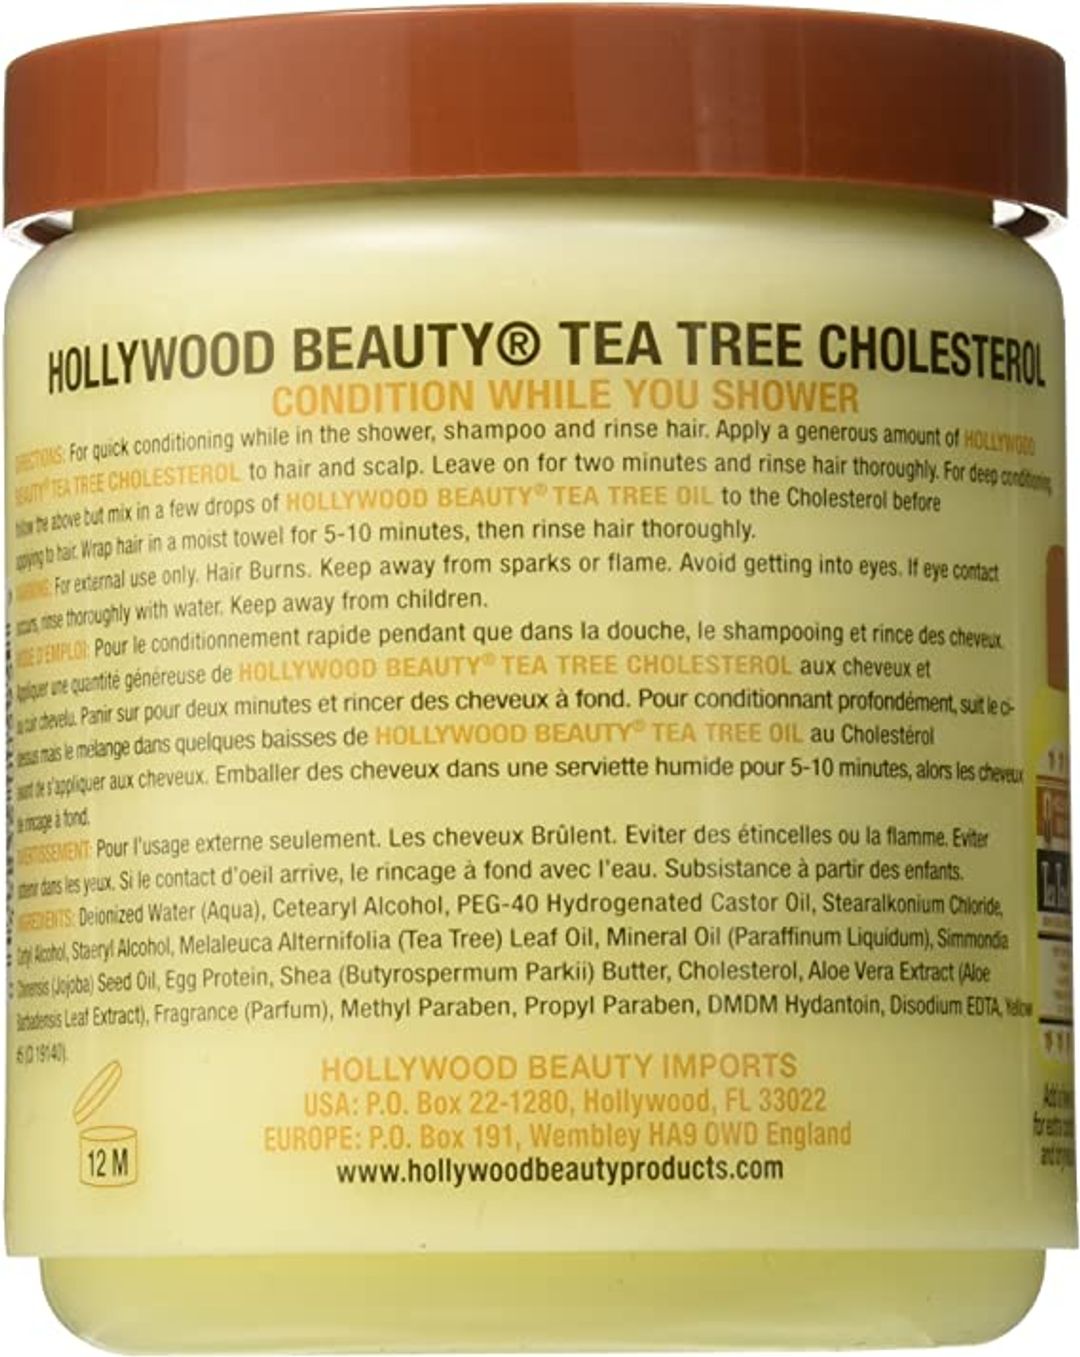 Hollywood Beauty Tea Tree Cholesterol - 20oz